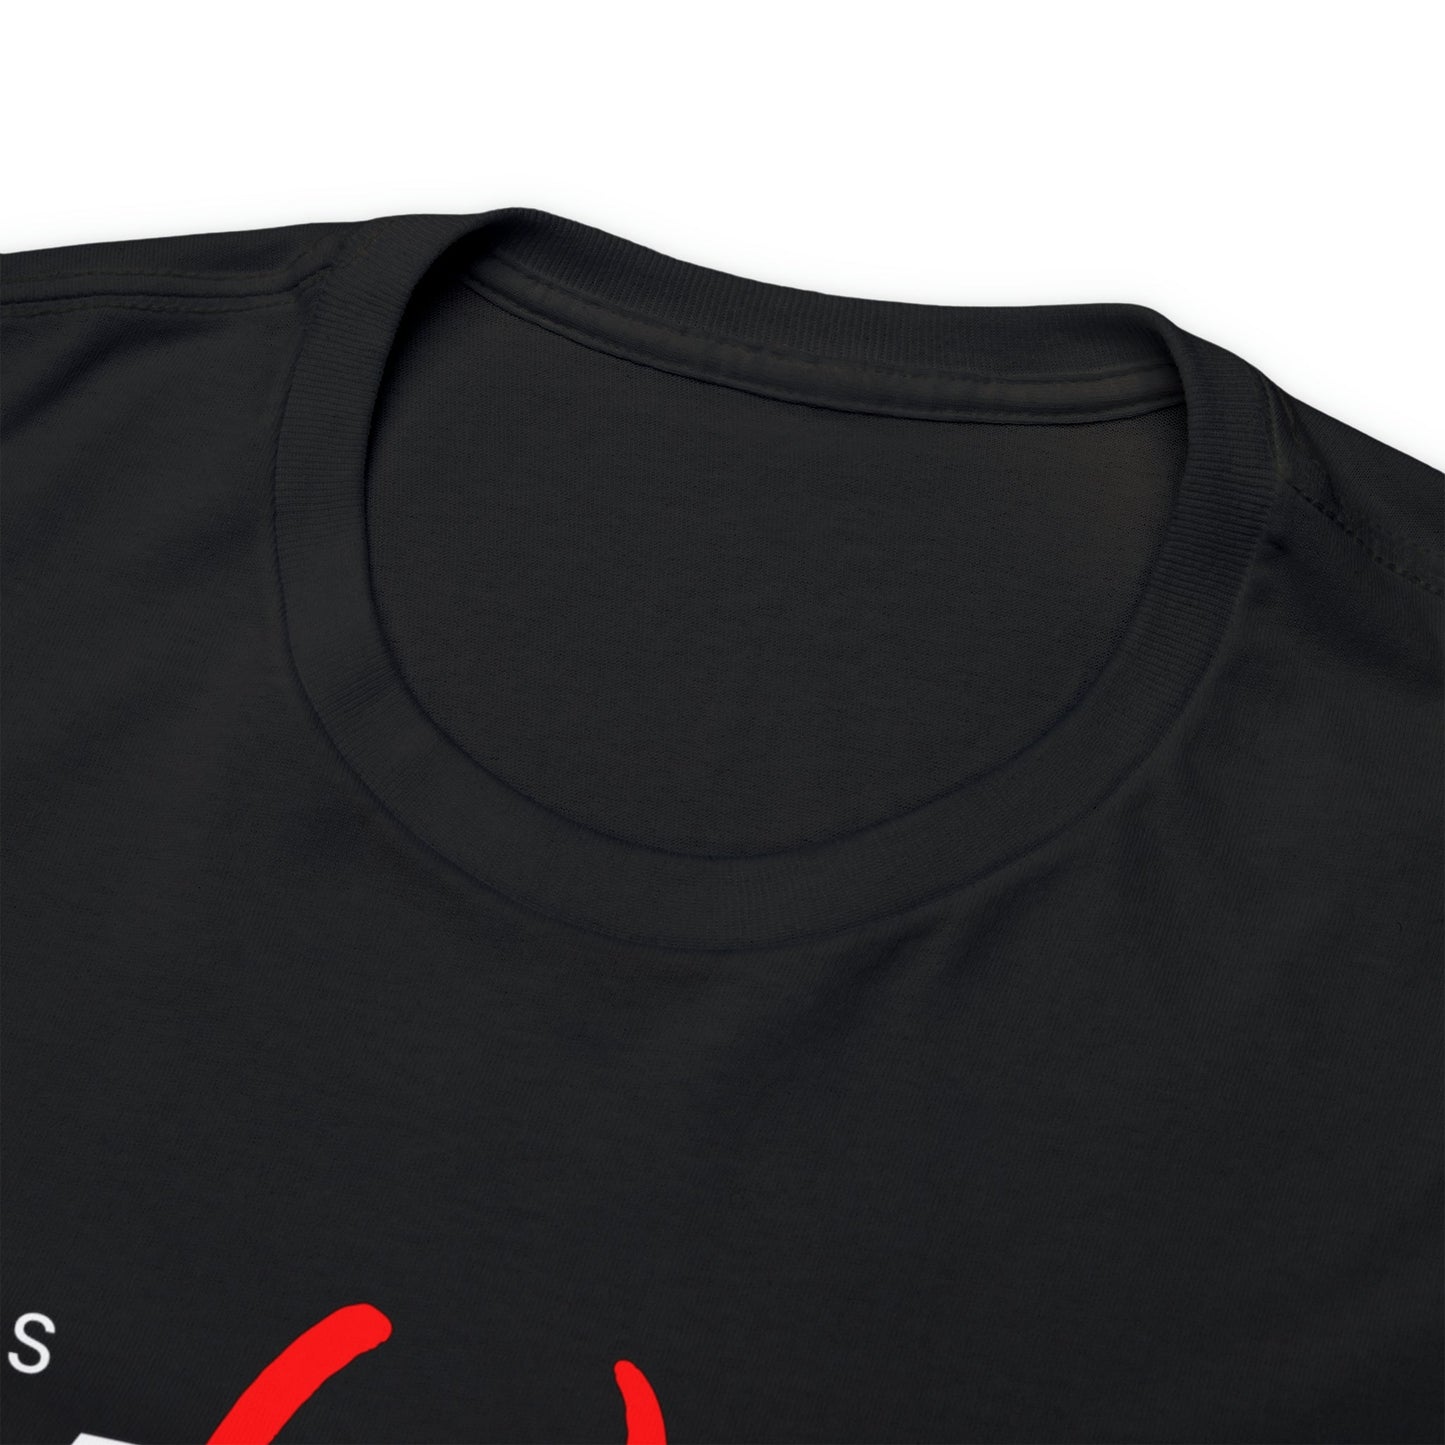 T-Shirt Basic - Homme - Collection "Fra©tigué"(110) - Le Traileur Anonyme